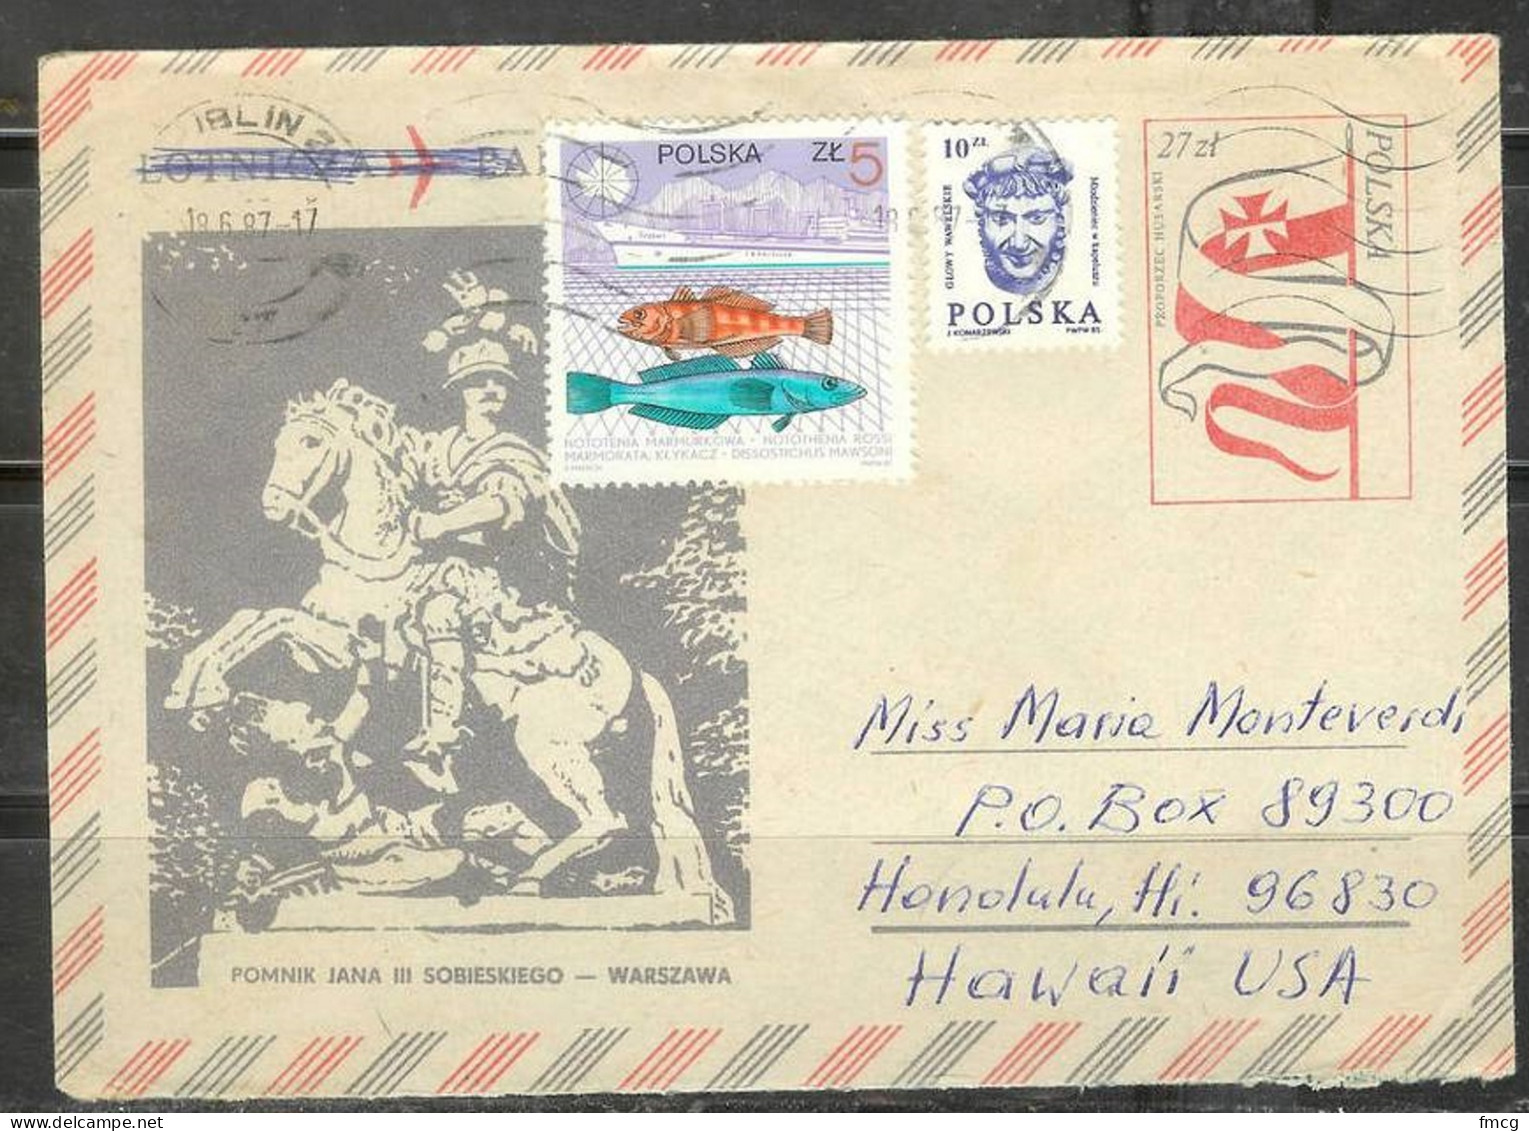 1987 Antarctic Ship & Fish, Postal Envelope To Hawaii - Cartas & Documentos